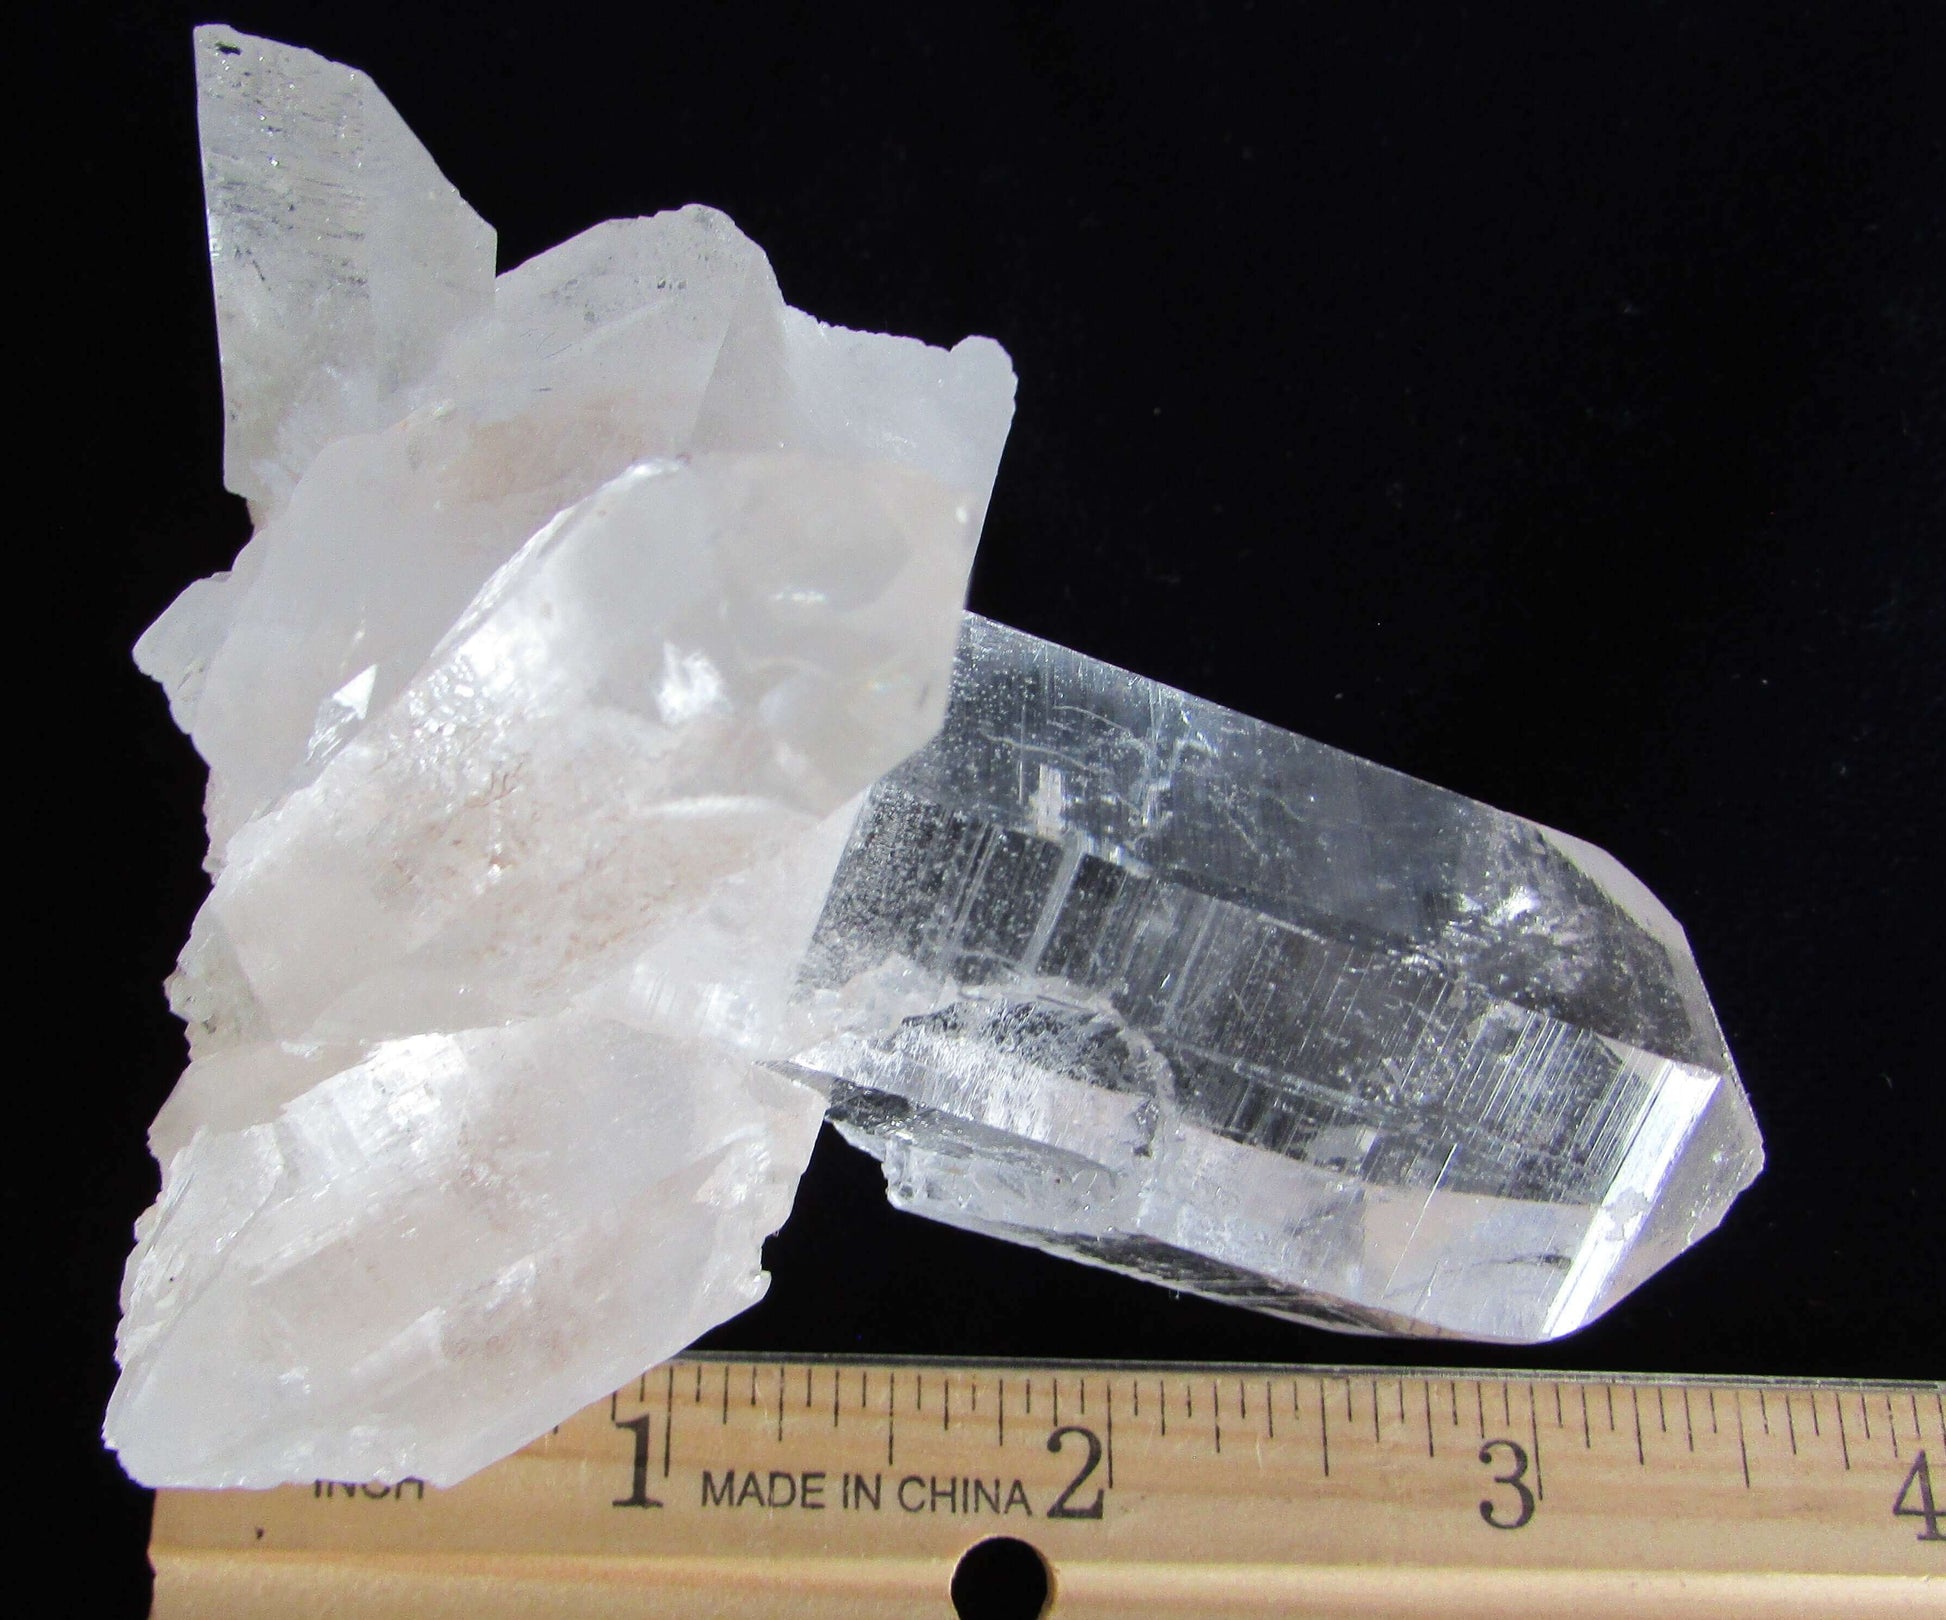 cathedral quartz crystal, water clear himalayan quartz